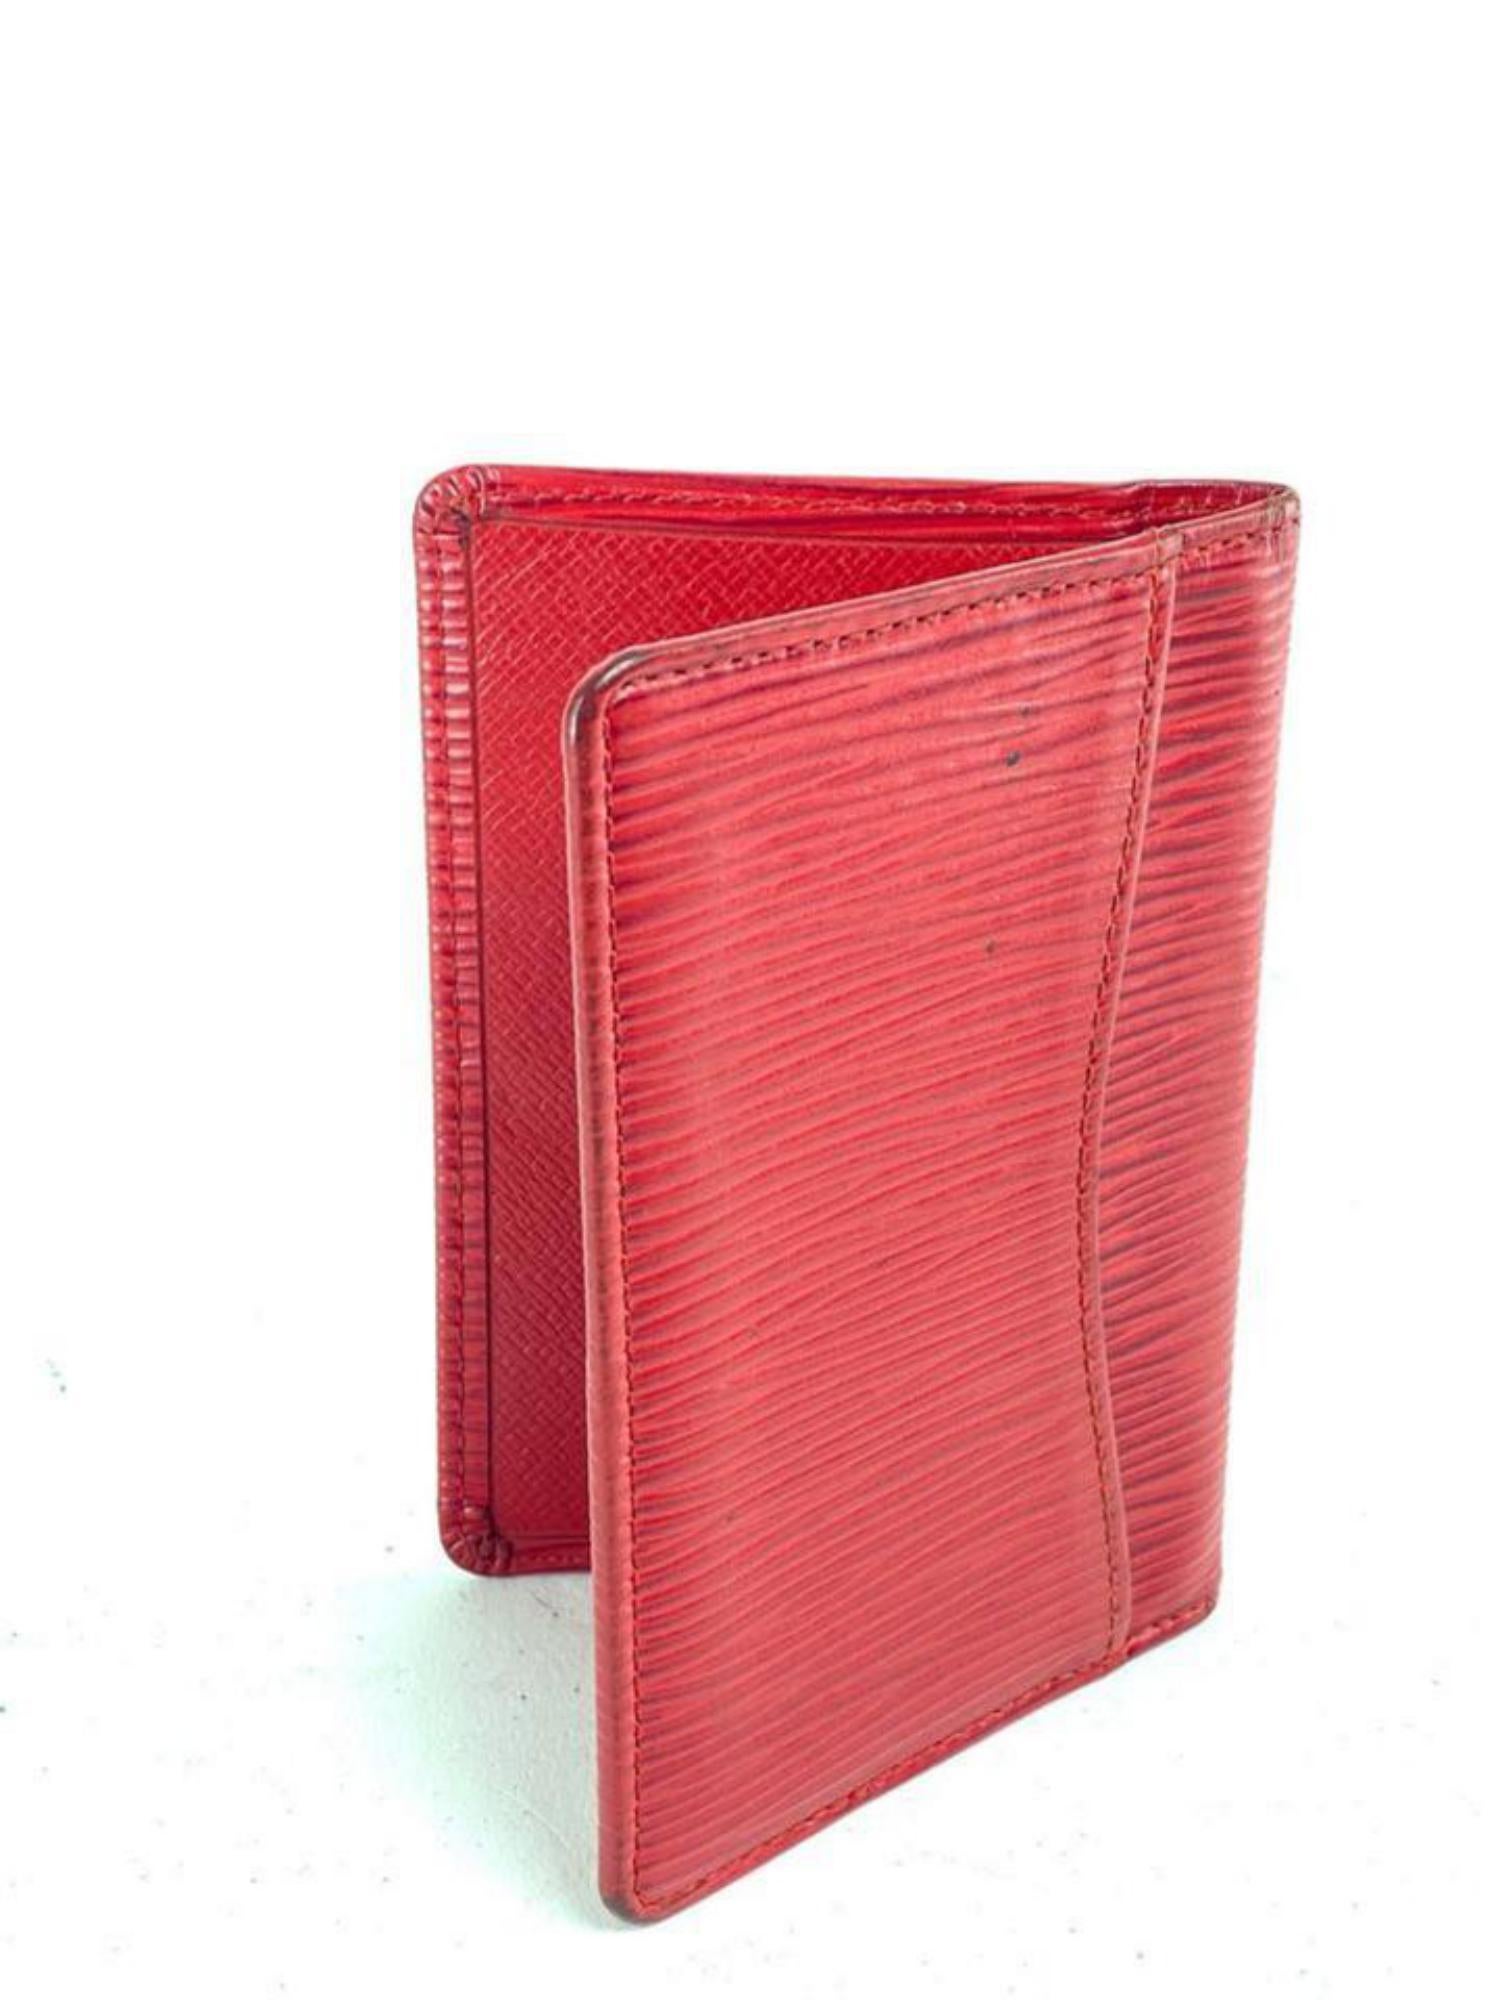 Louis Vuitton Red Epi Leather Card Case Wallet Holder 5LVL1223 2